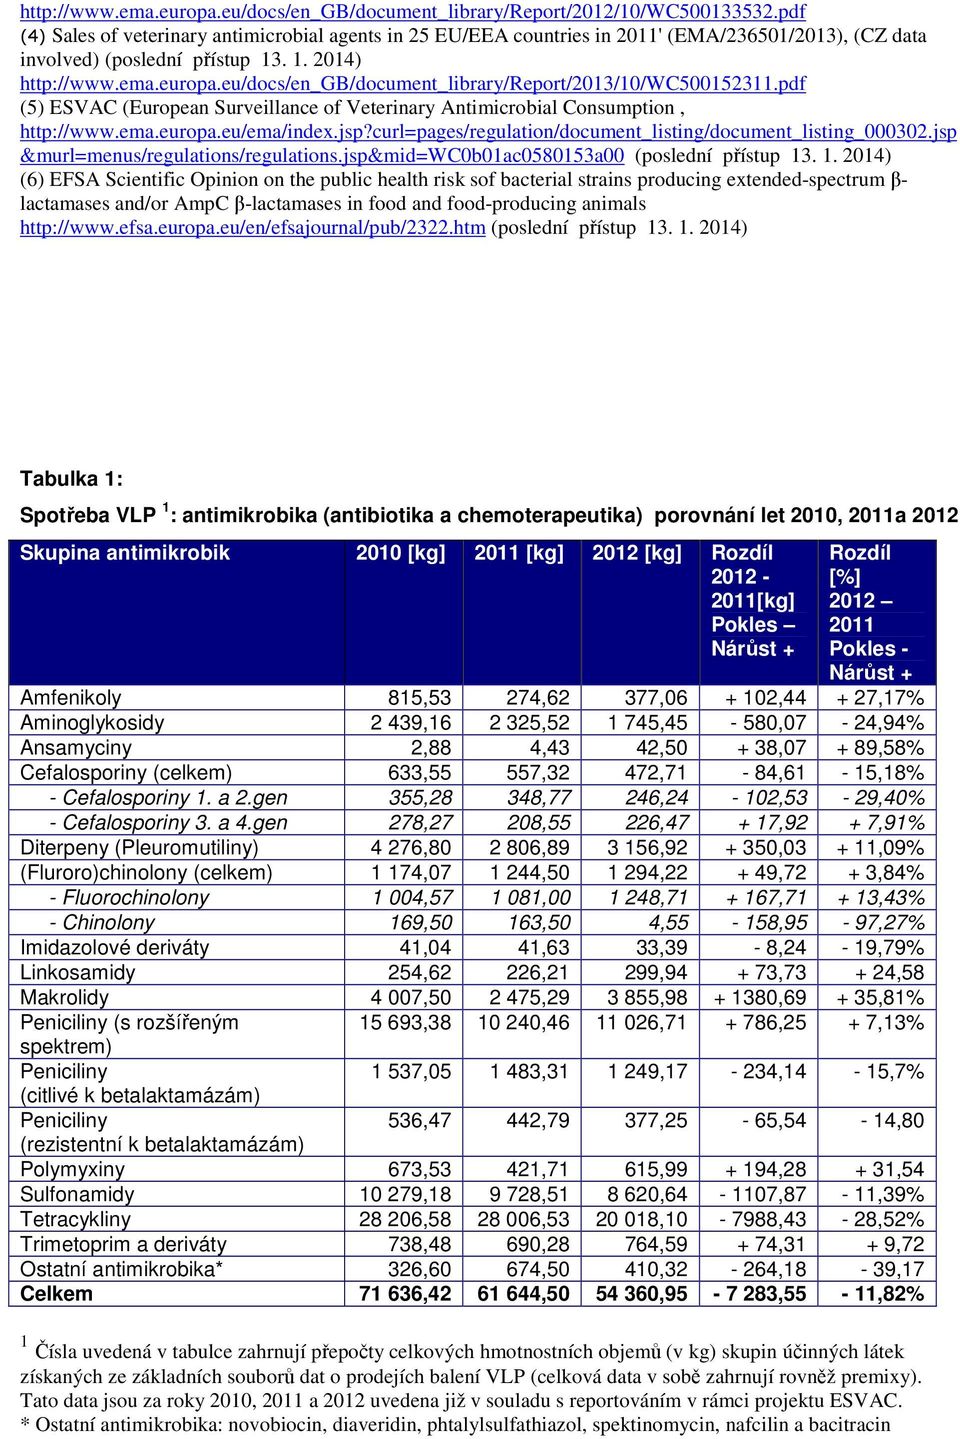 eu/docs/en_gb/document_library/report/2013/10/wc500152311.pdf (5) ESVAC (European Surveillance of Veterinary Antimicrobial Consumption, http://www.ema.europa.eu/ema/index.jsp?